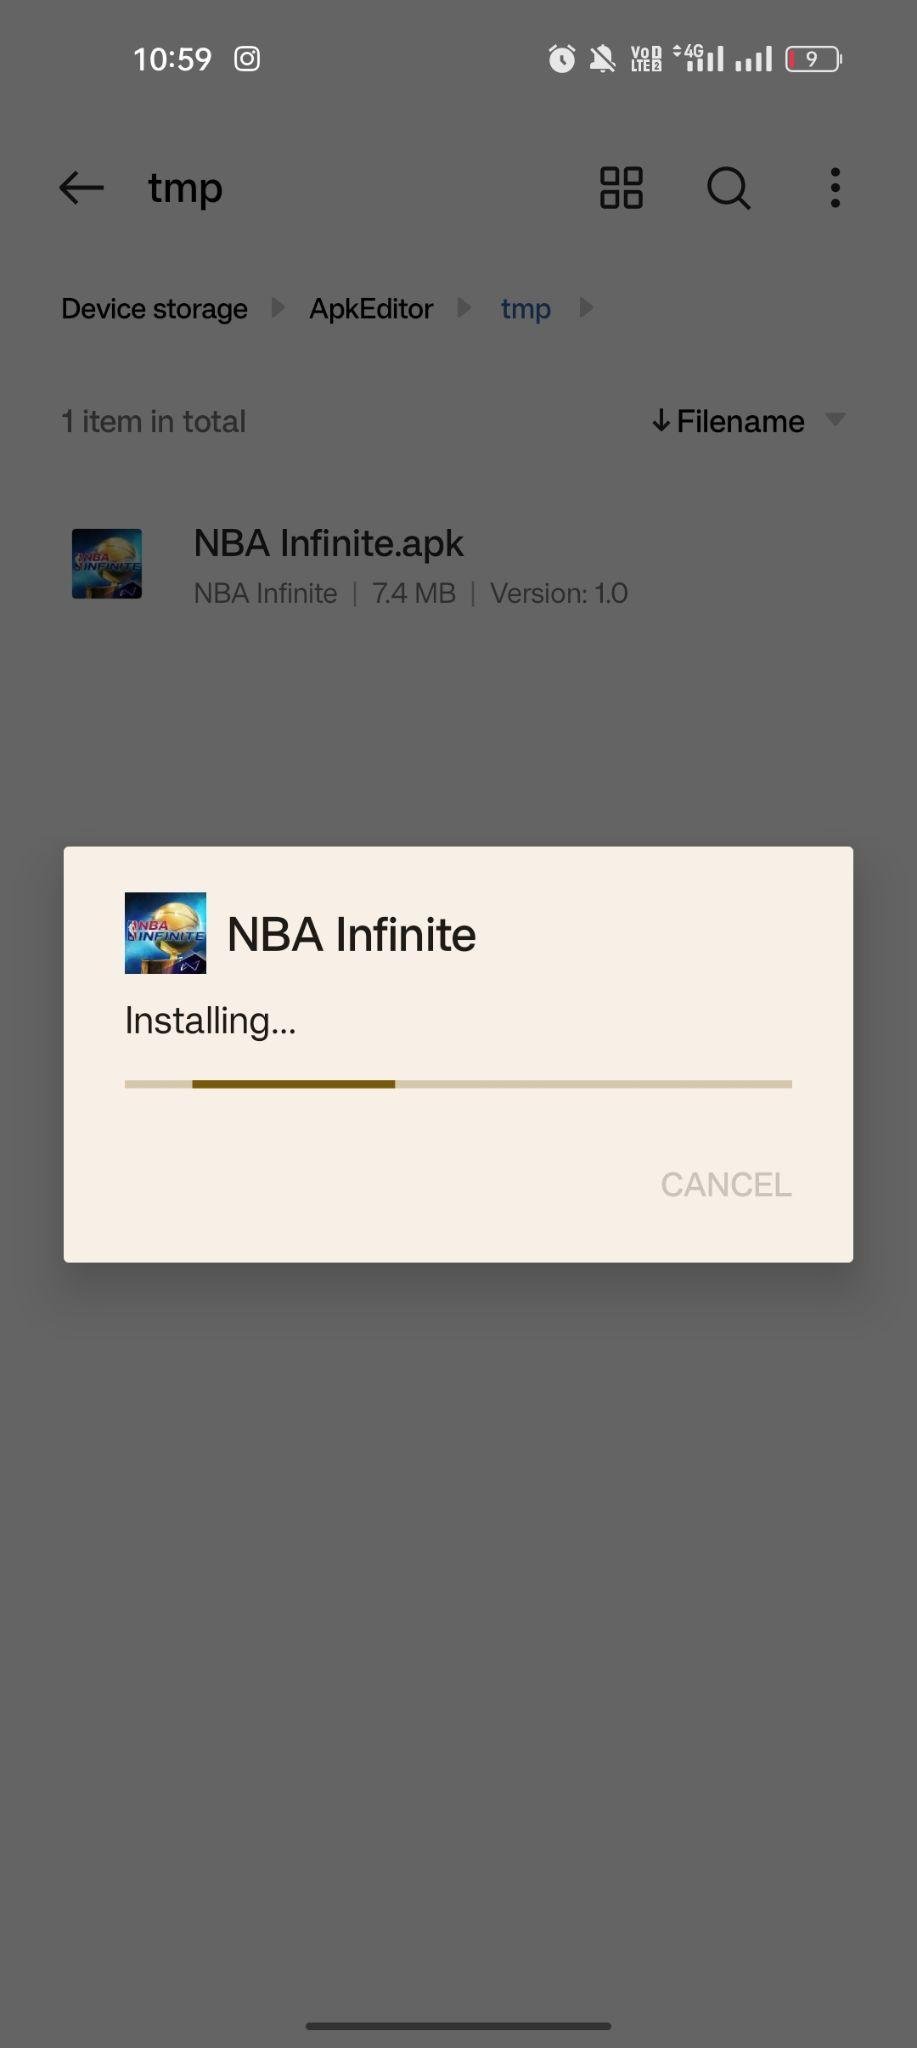 NBA Infinite apk installing